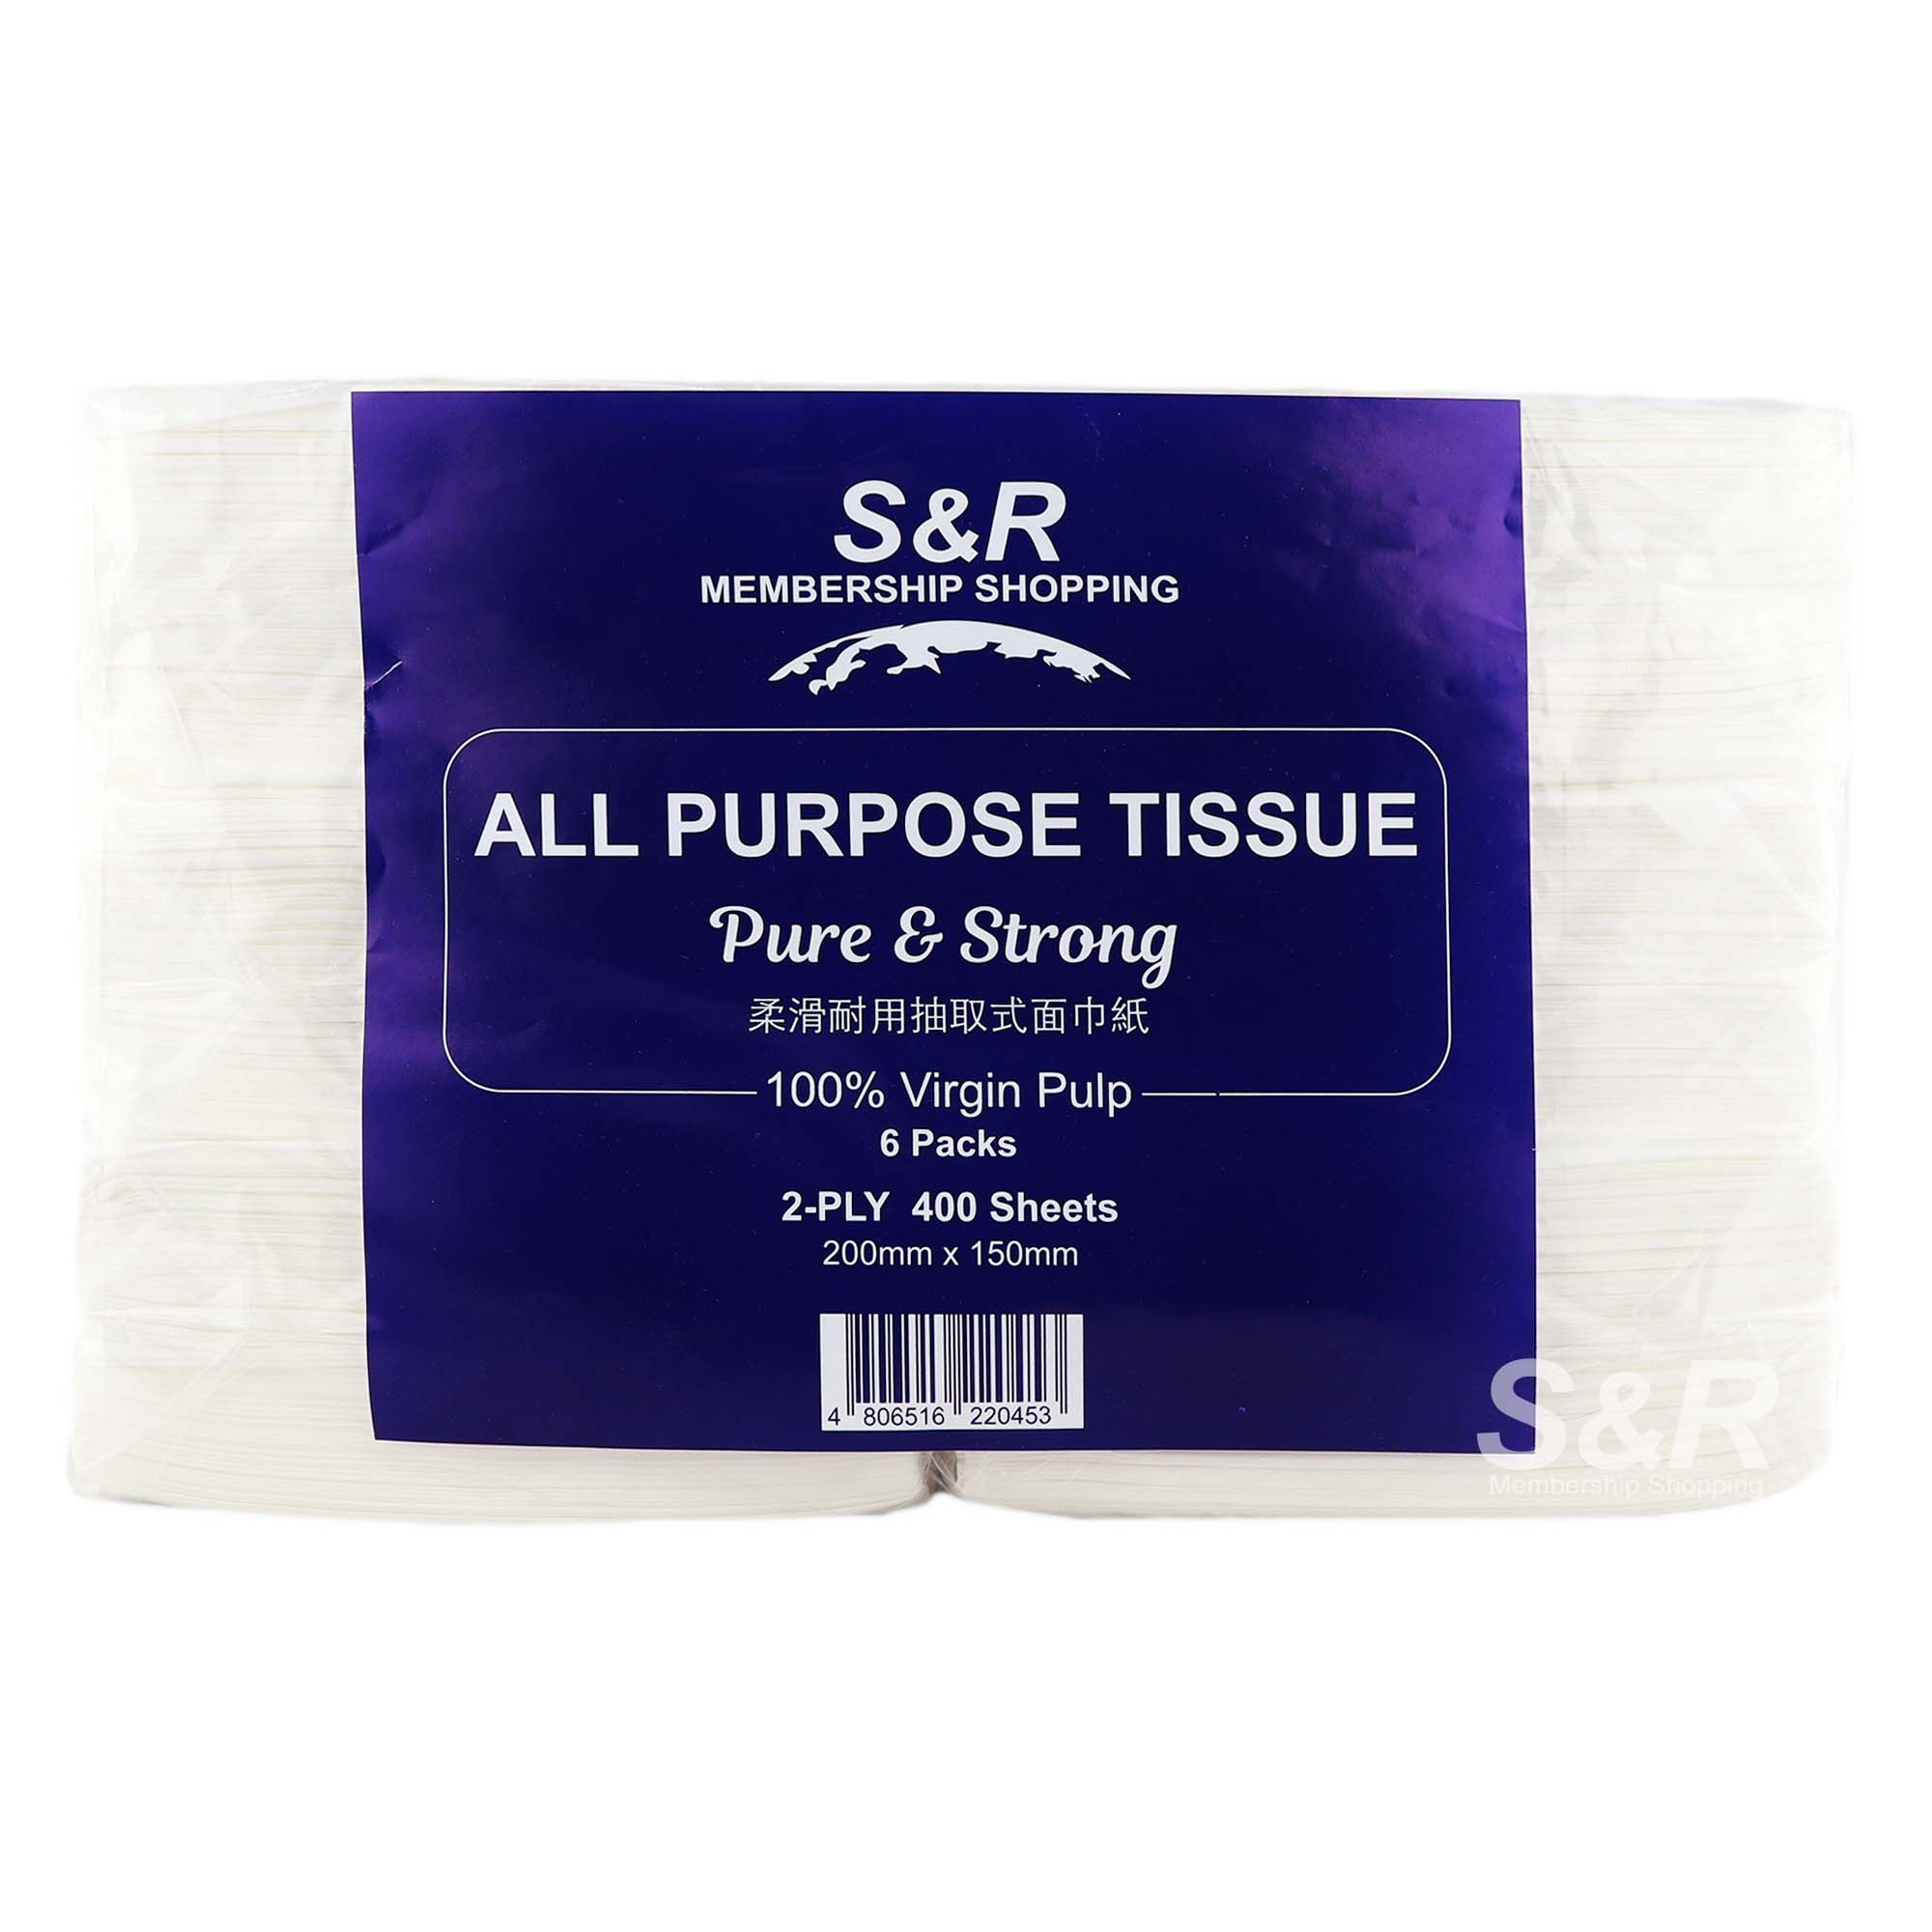 S R Membership Shopping All Purpose Tissue 6 Packs